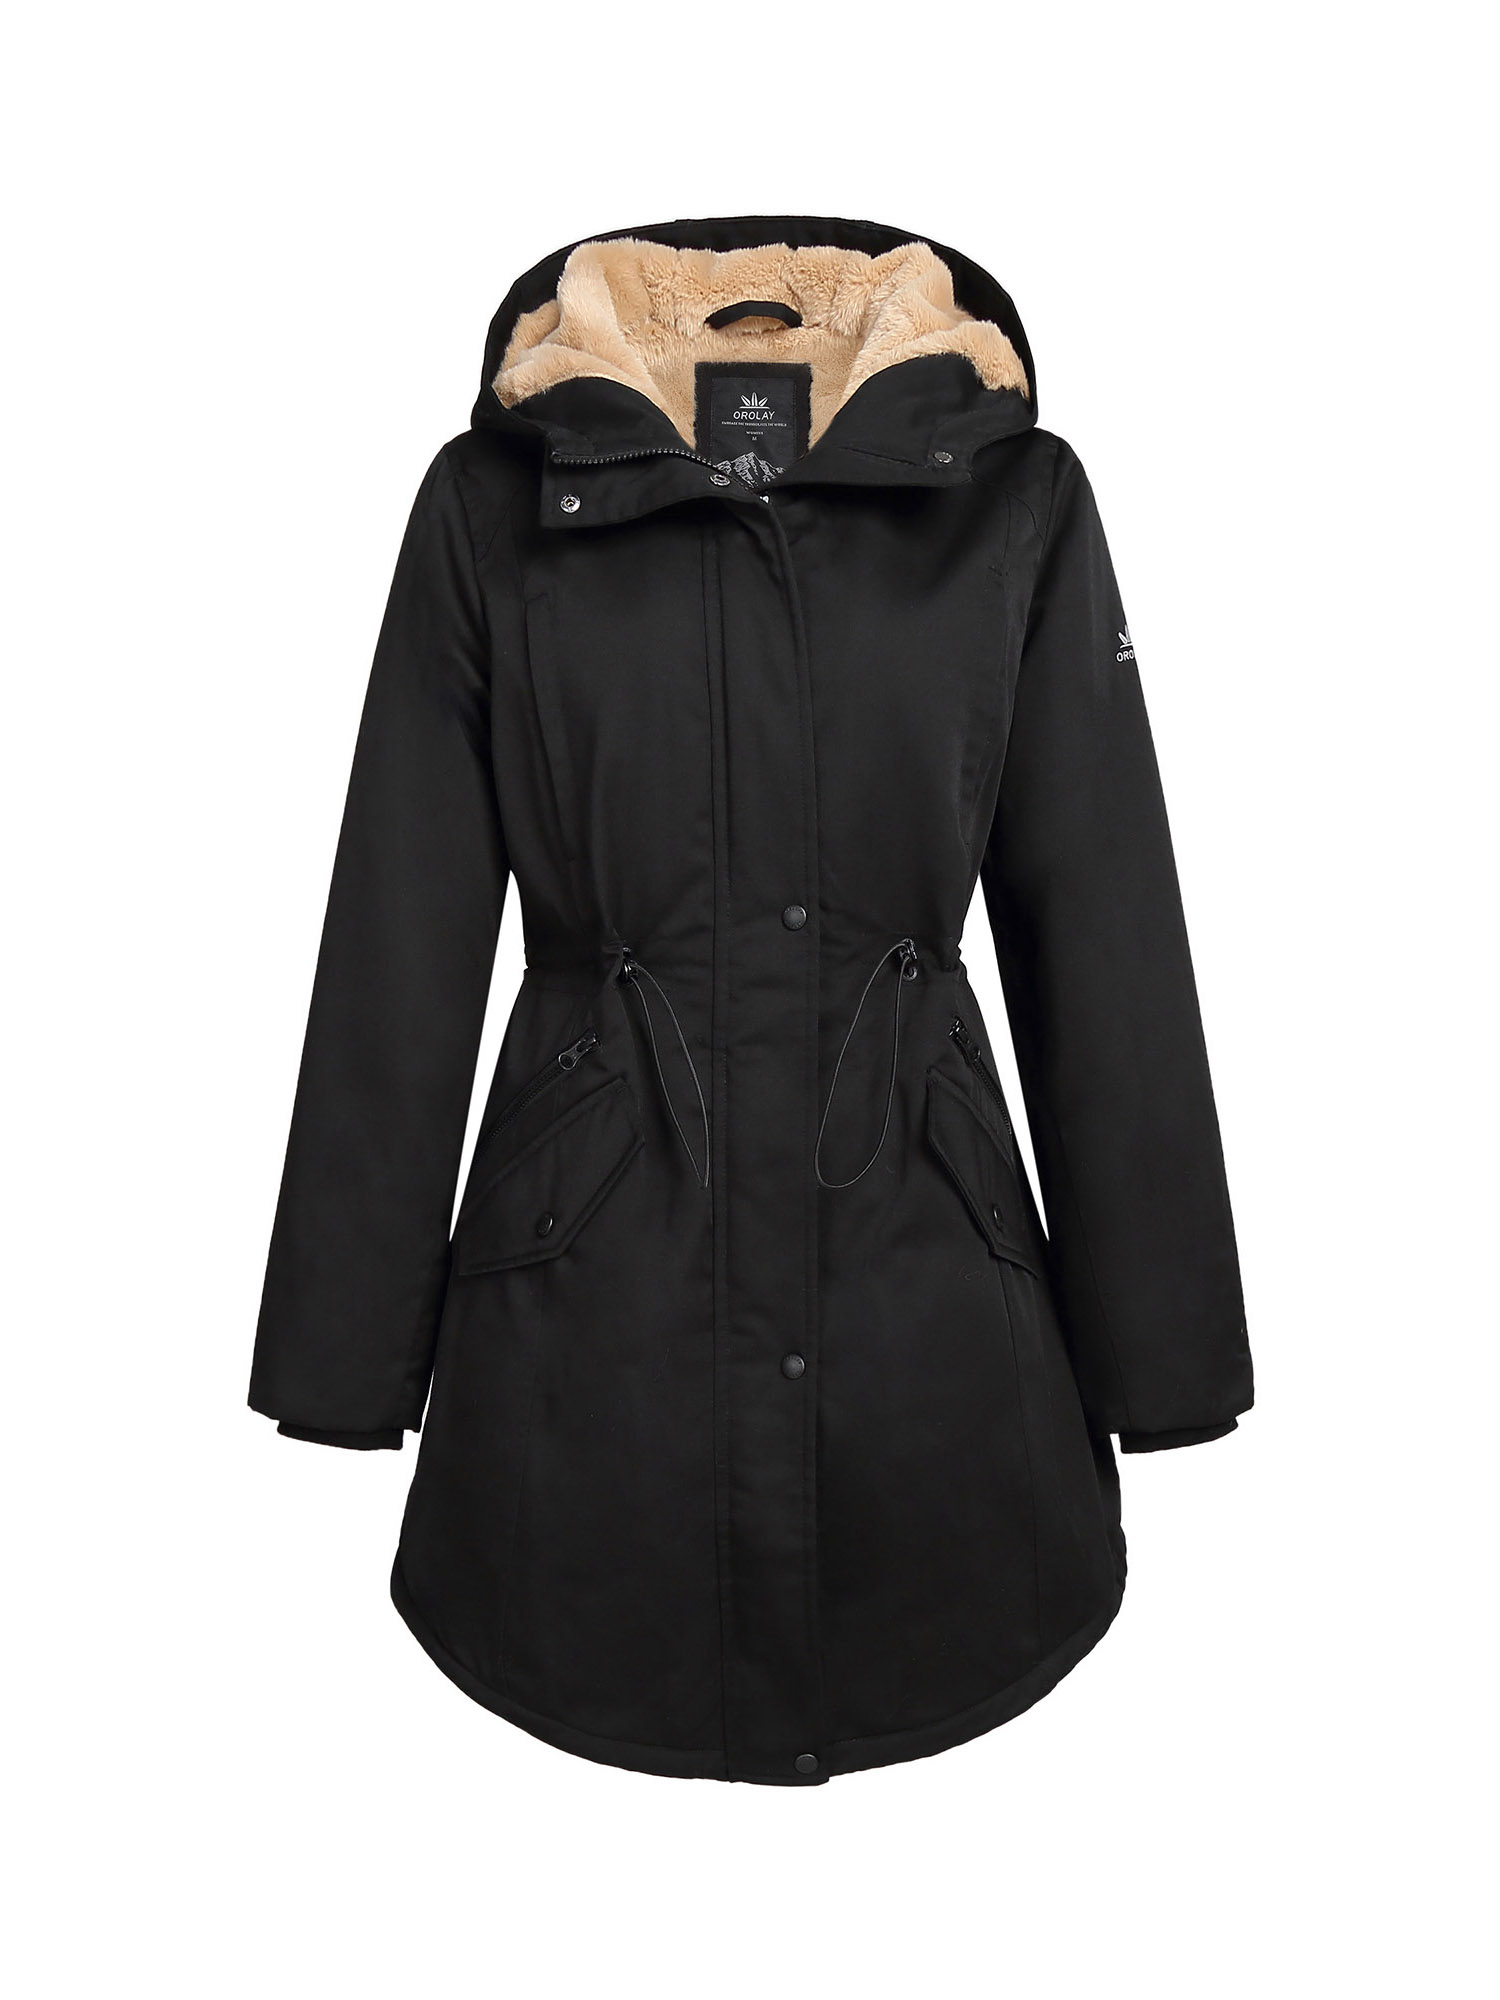 Orolay Women's Winter Parka Fleece Parka Warm Winter Coat Hoodie Jacket Mid length Winter Jacket Black XS - image 1 of 5